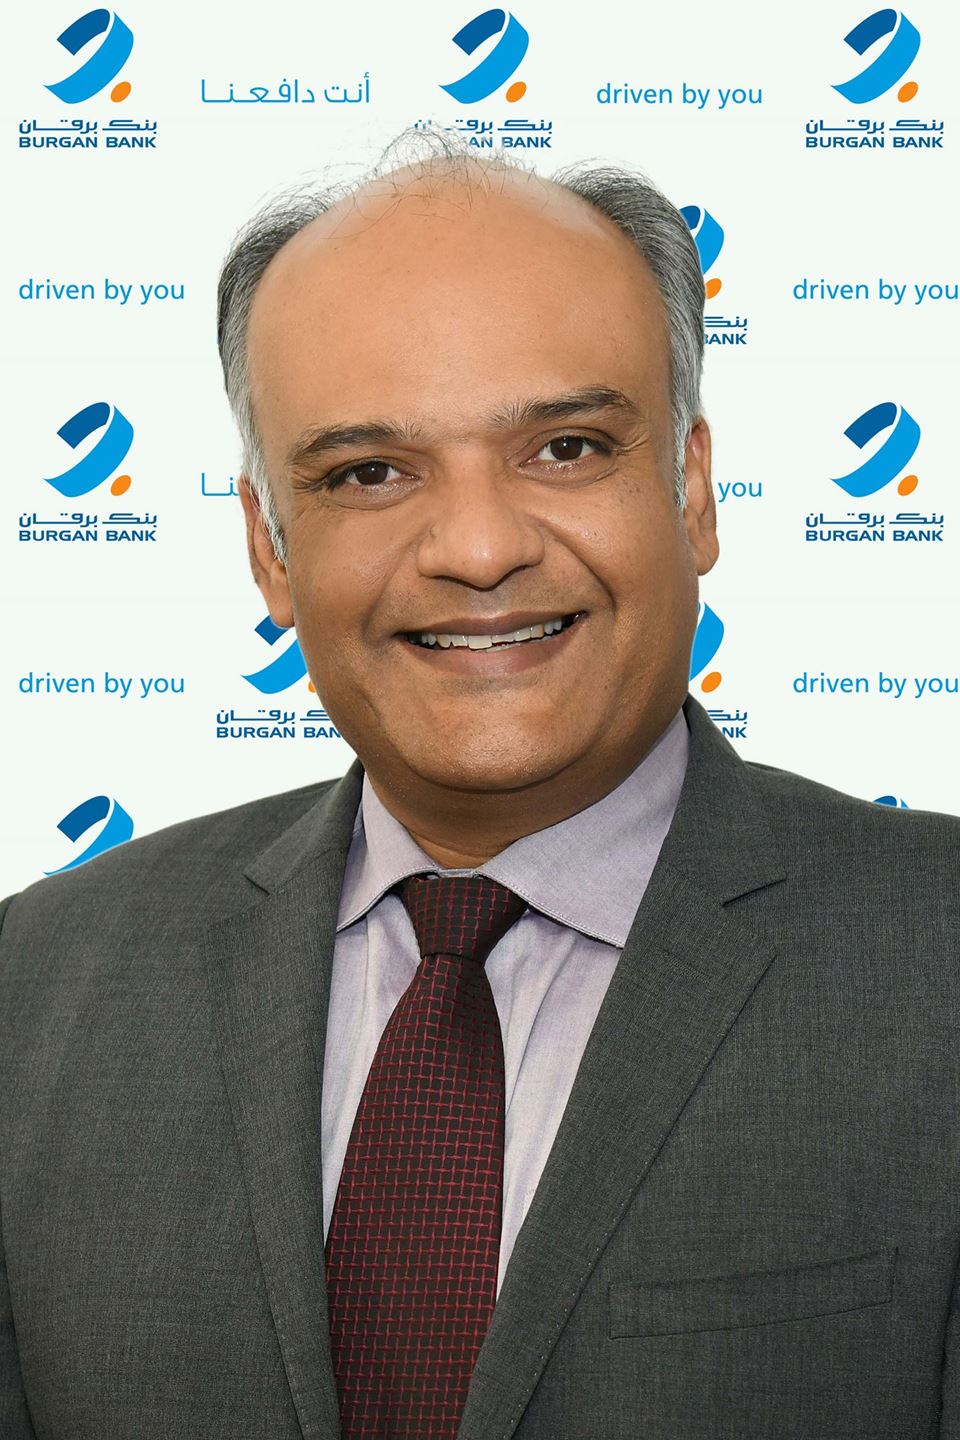 Mr. Swapnil D. J. Desai, Head of Cash Management at Burgan Bank